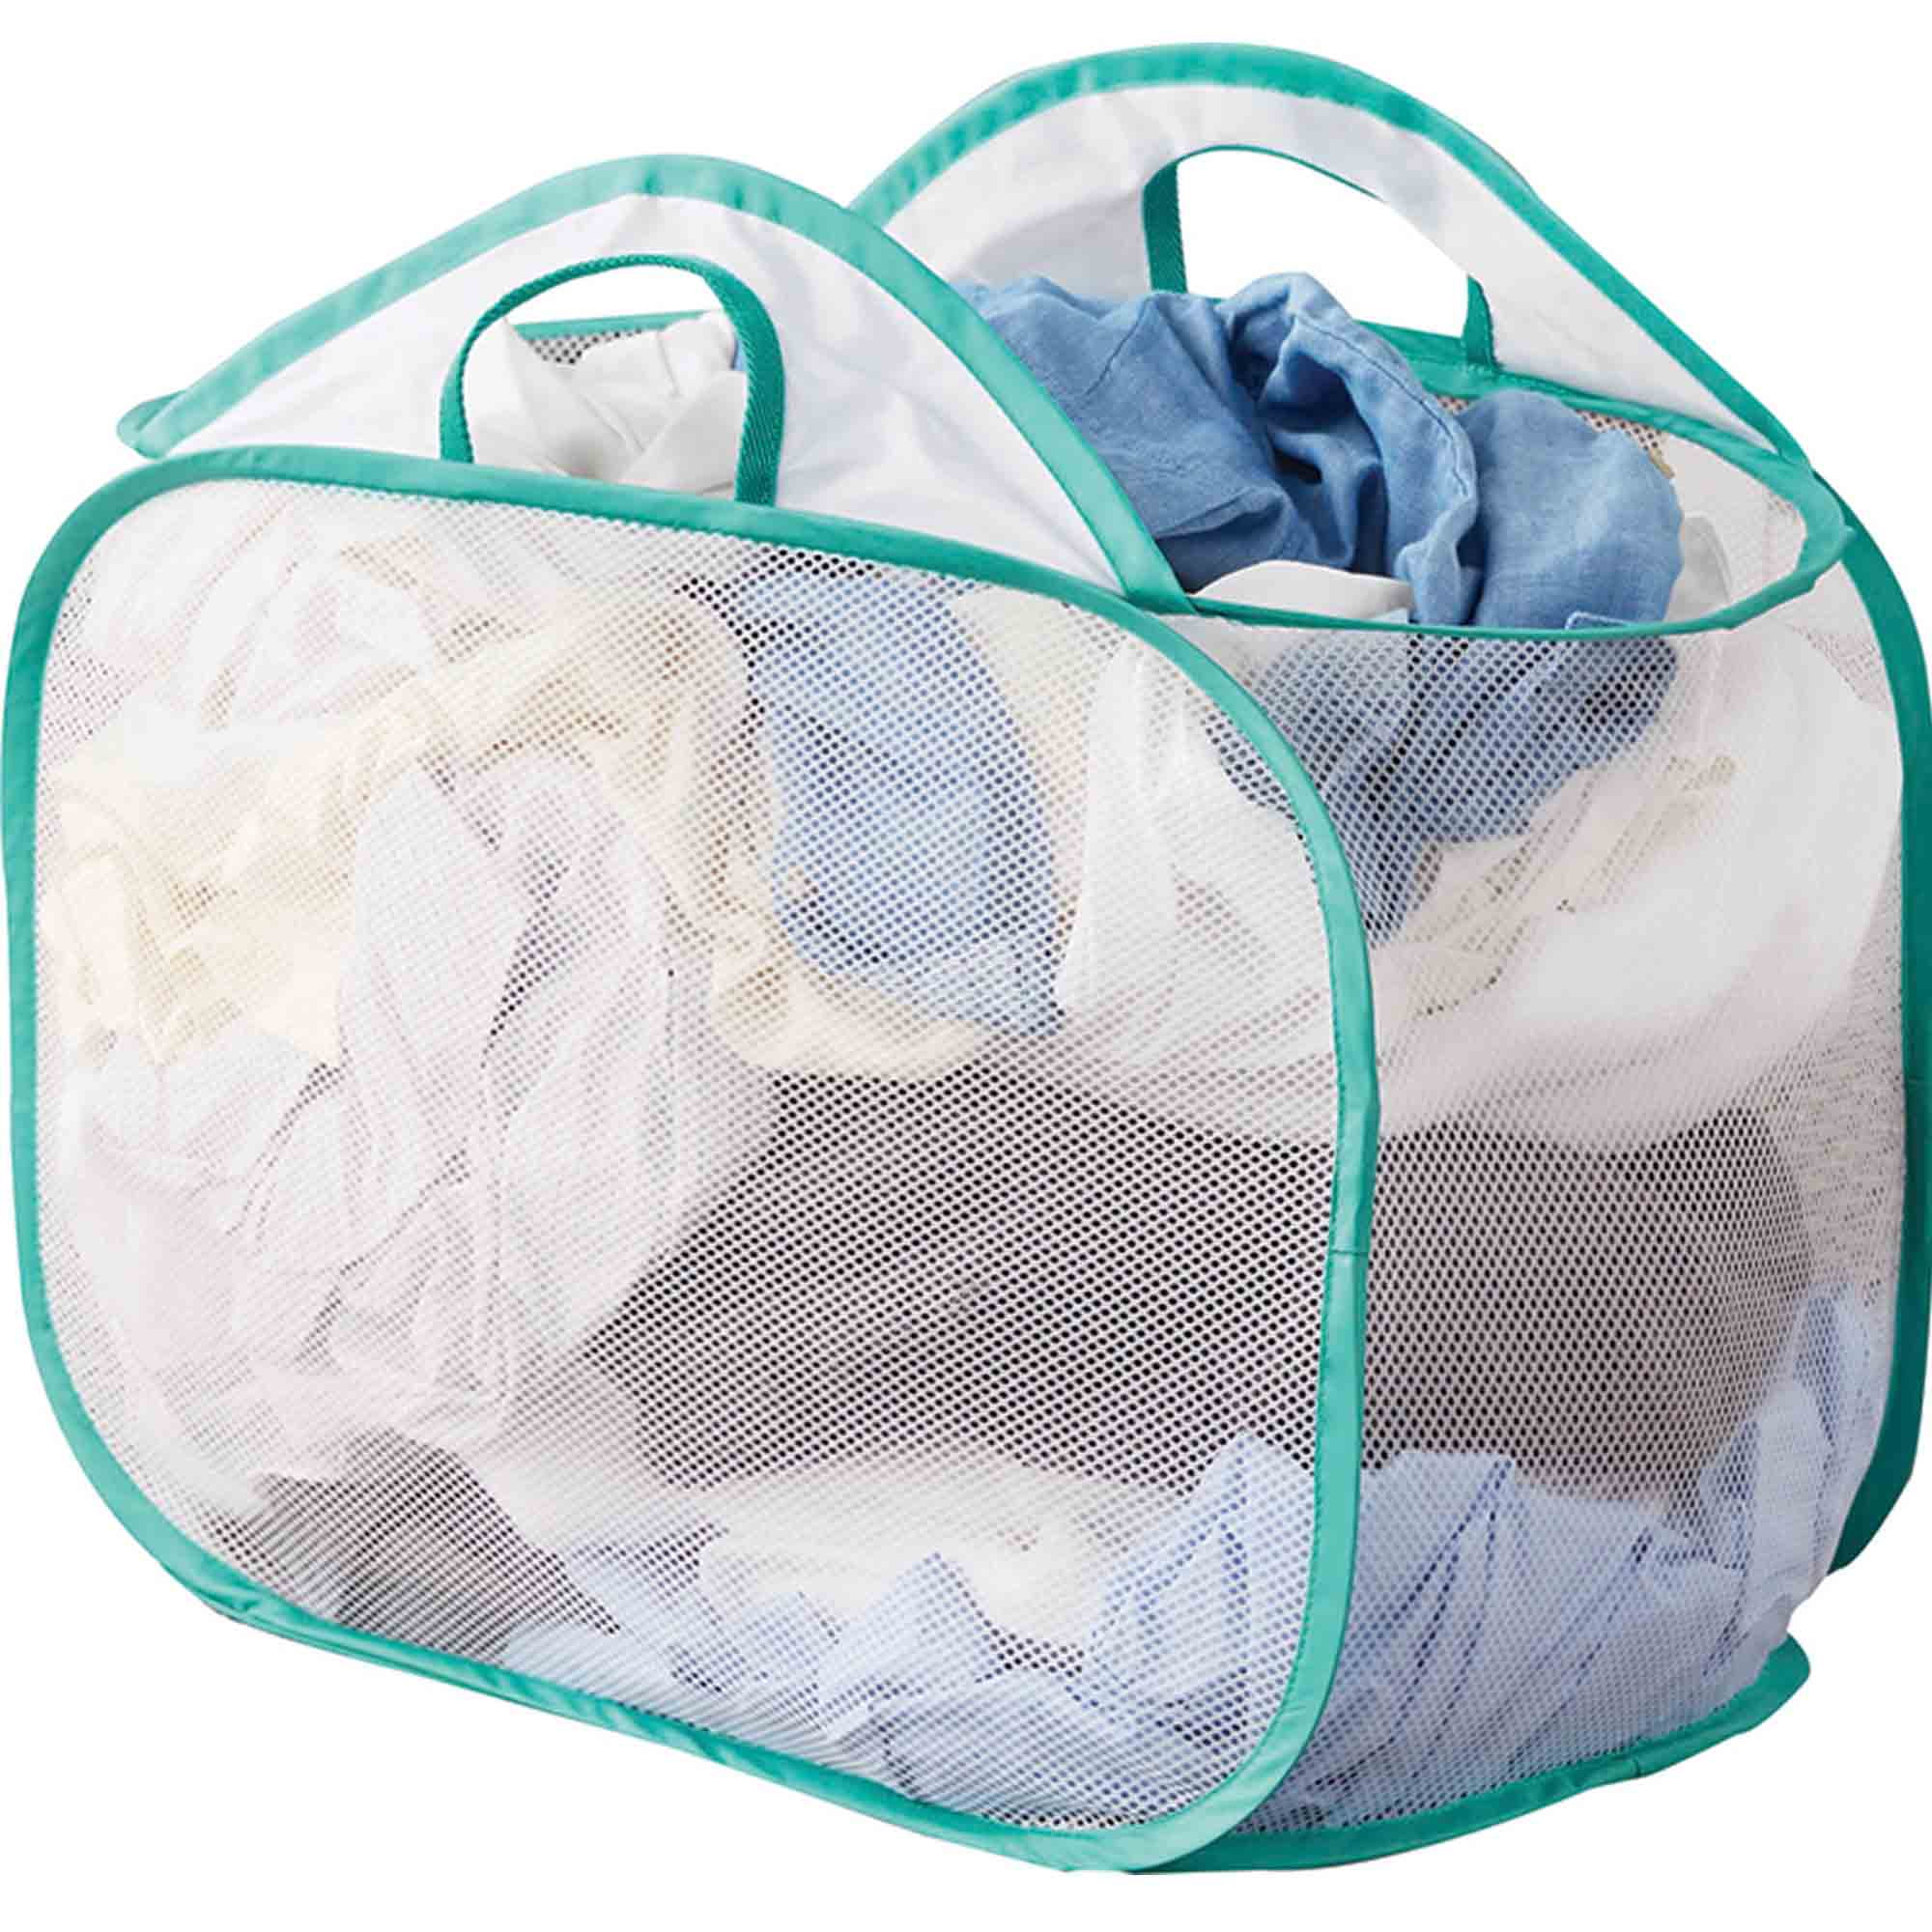 Mainstays Pop-Up Mesh Laundry Basket, White